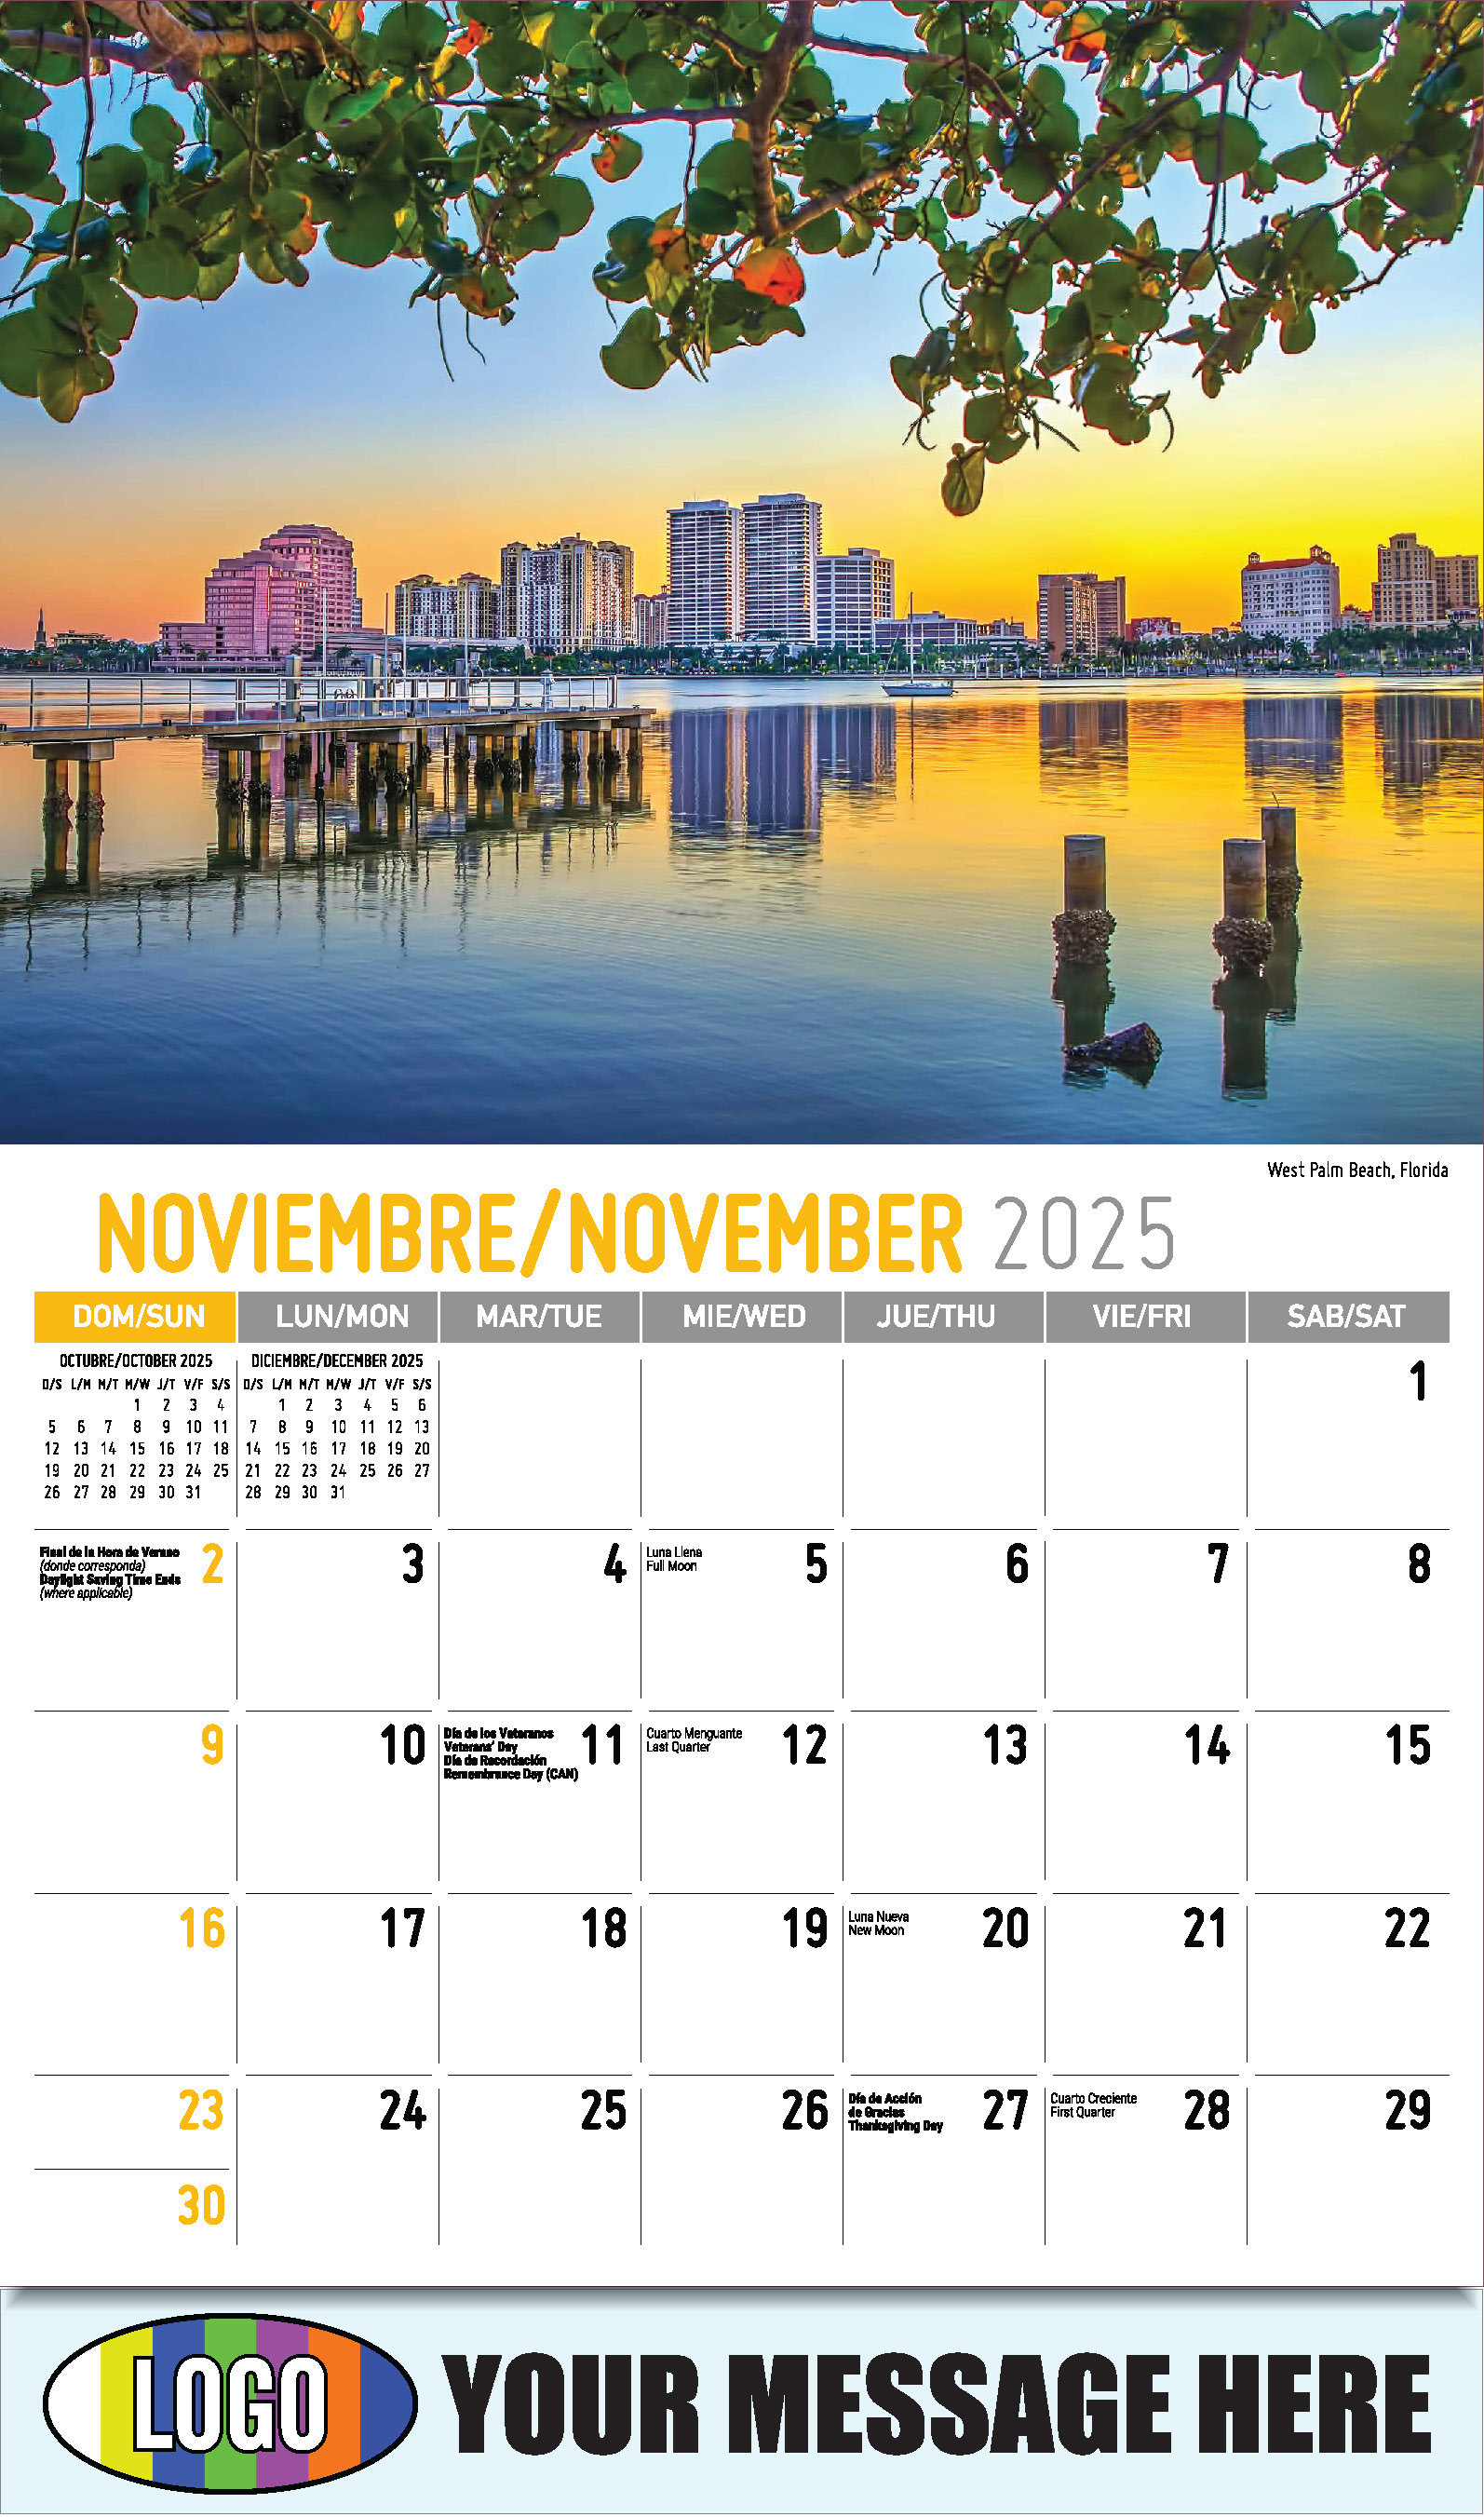 Scenes of America 2025 Bilingual Business Promo Calendar - November